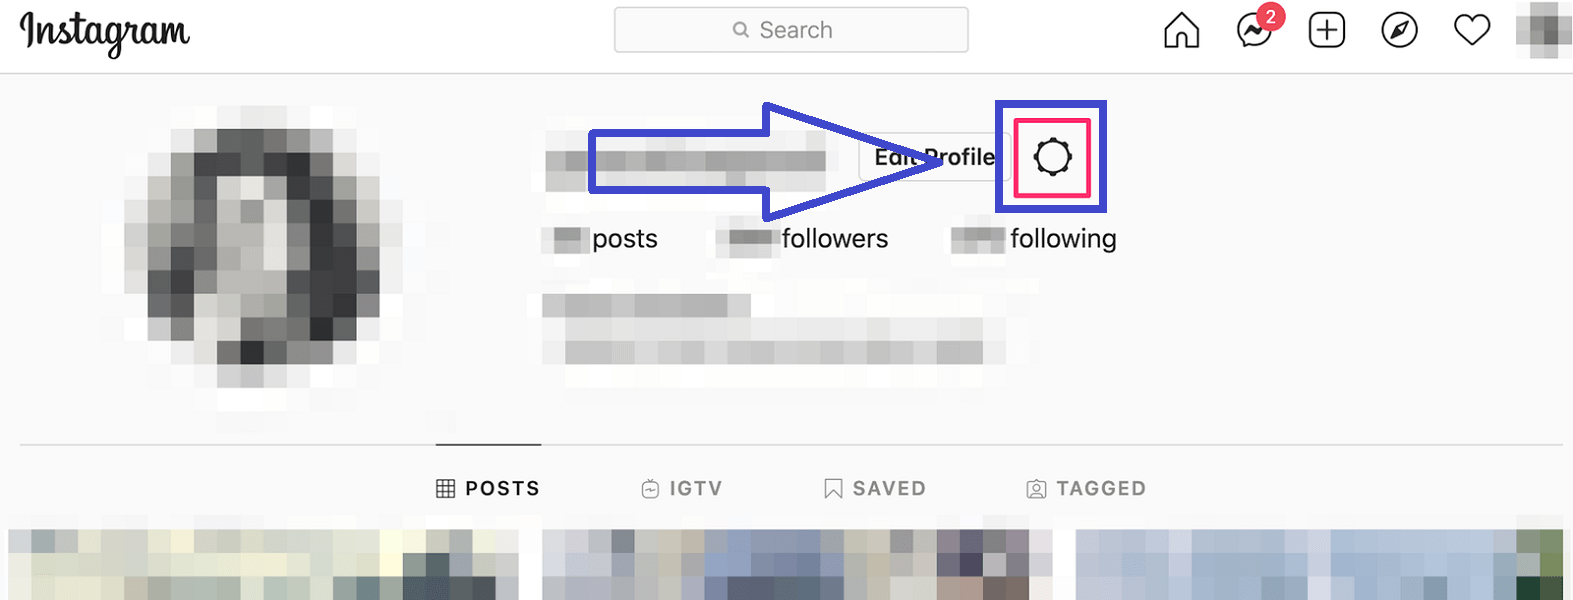 How to change Instagram password through the website